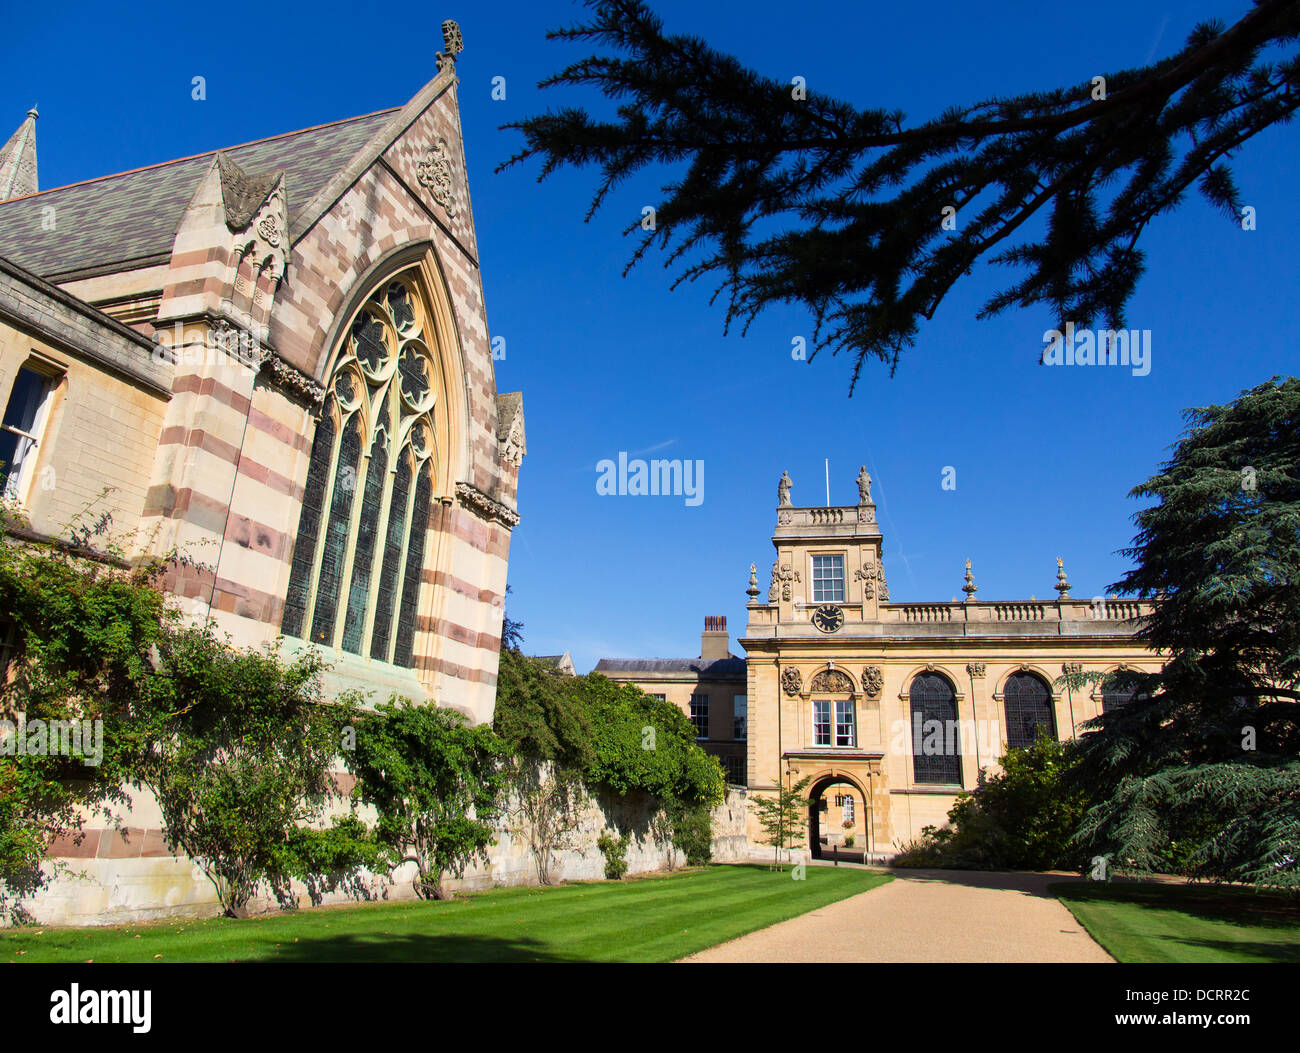 The Front Quadrangle of Trinity College, Oxford 1 Stock Photo